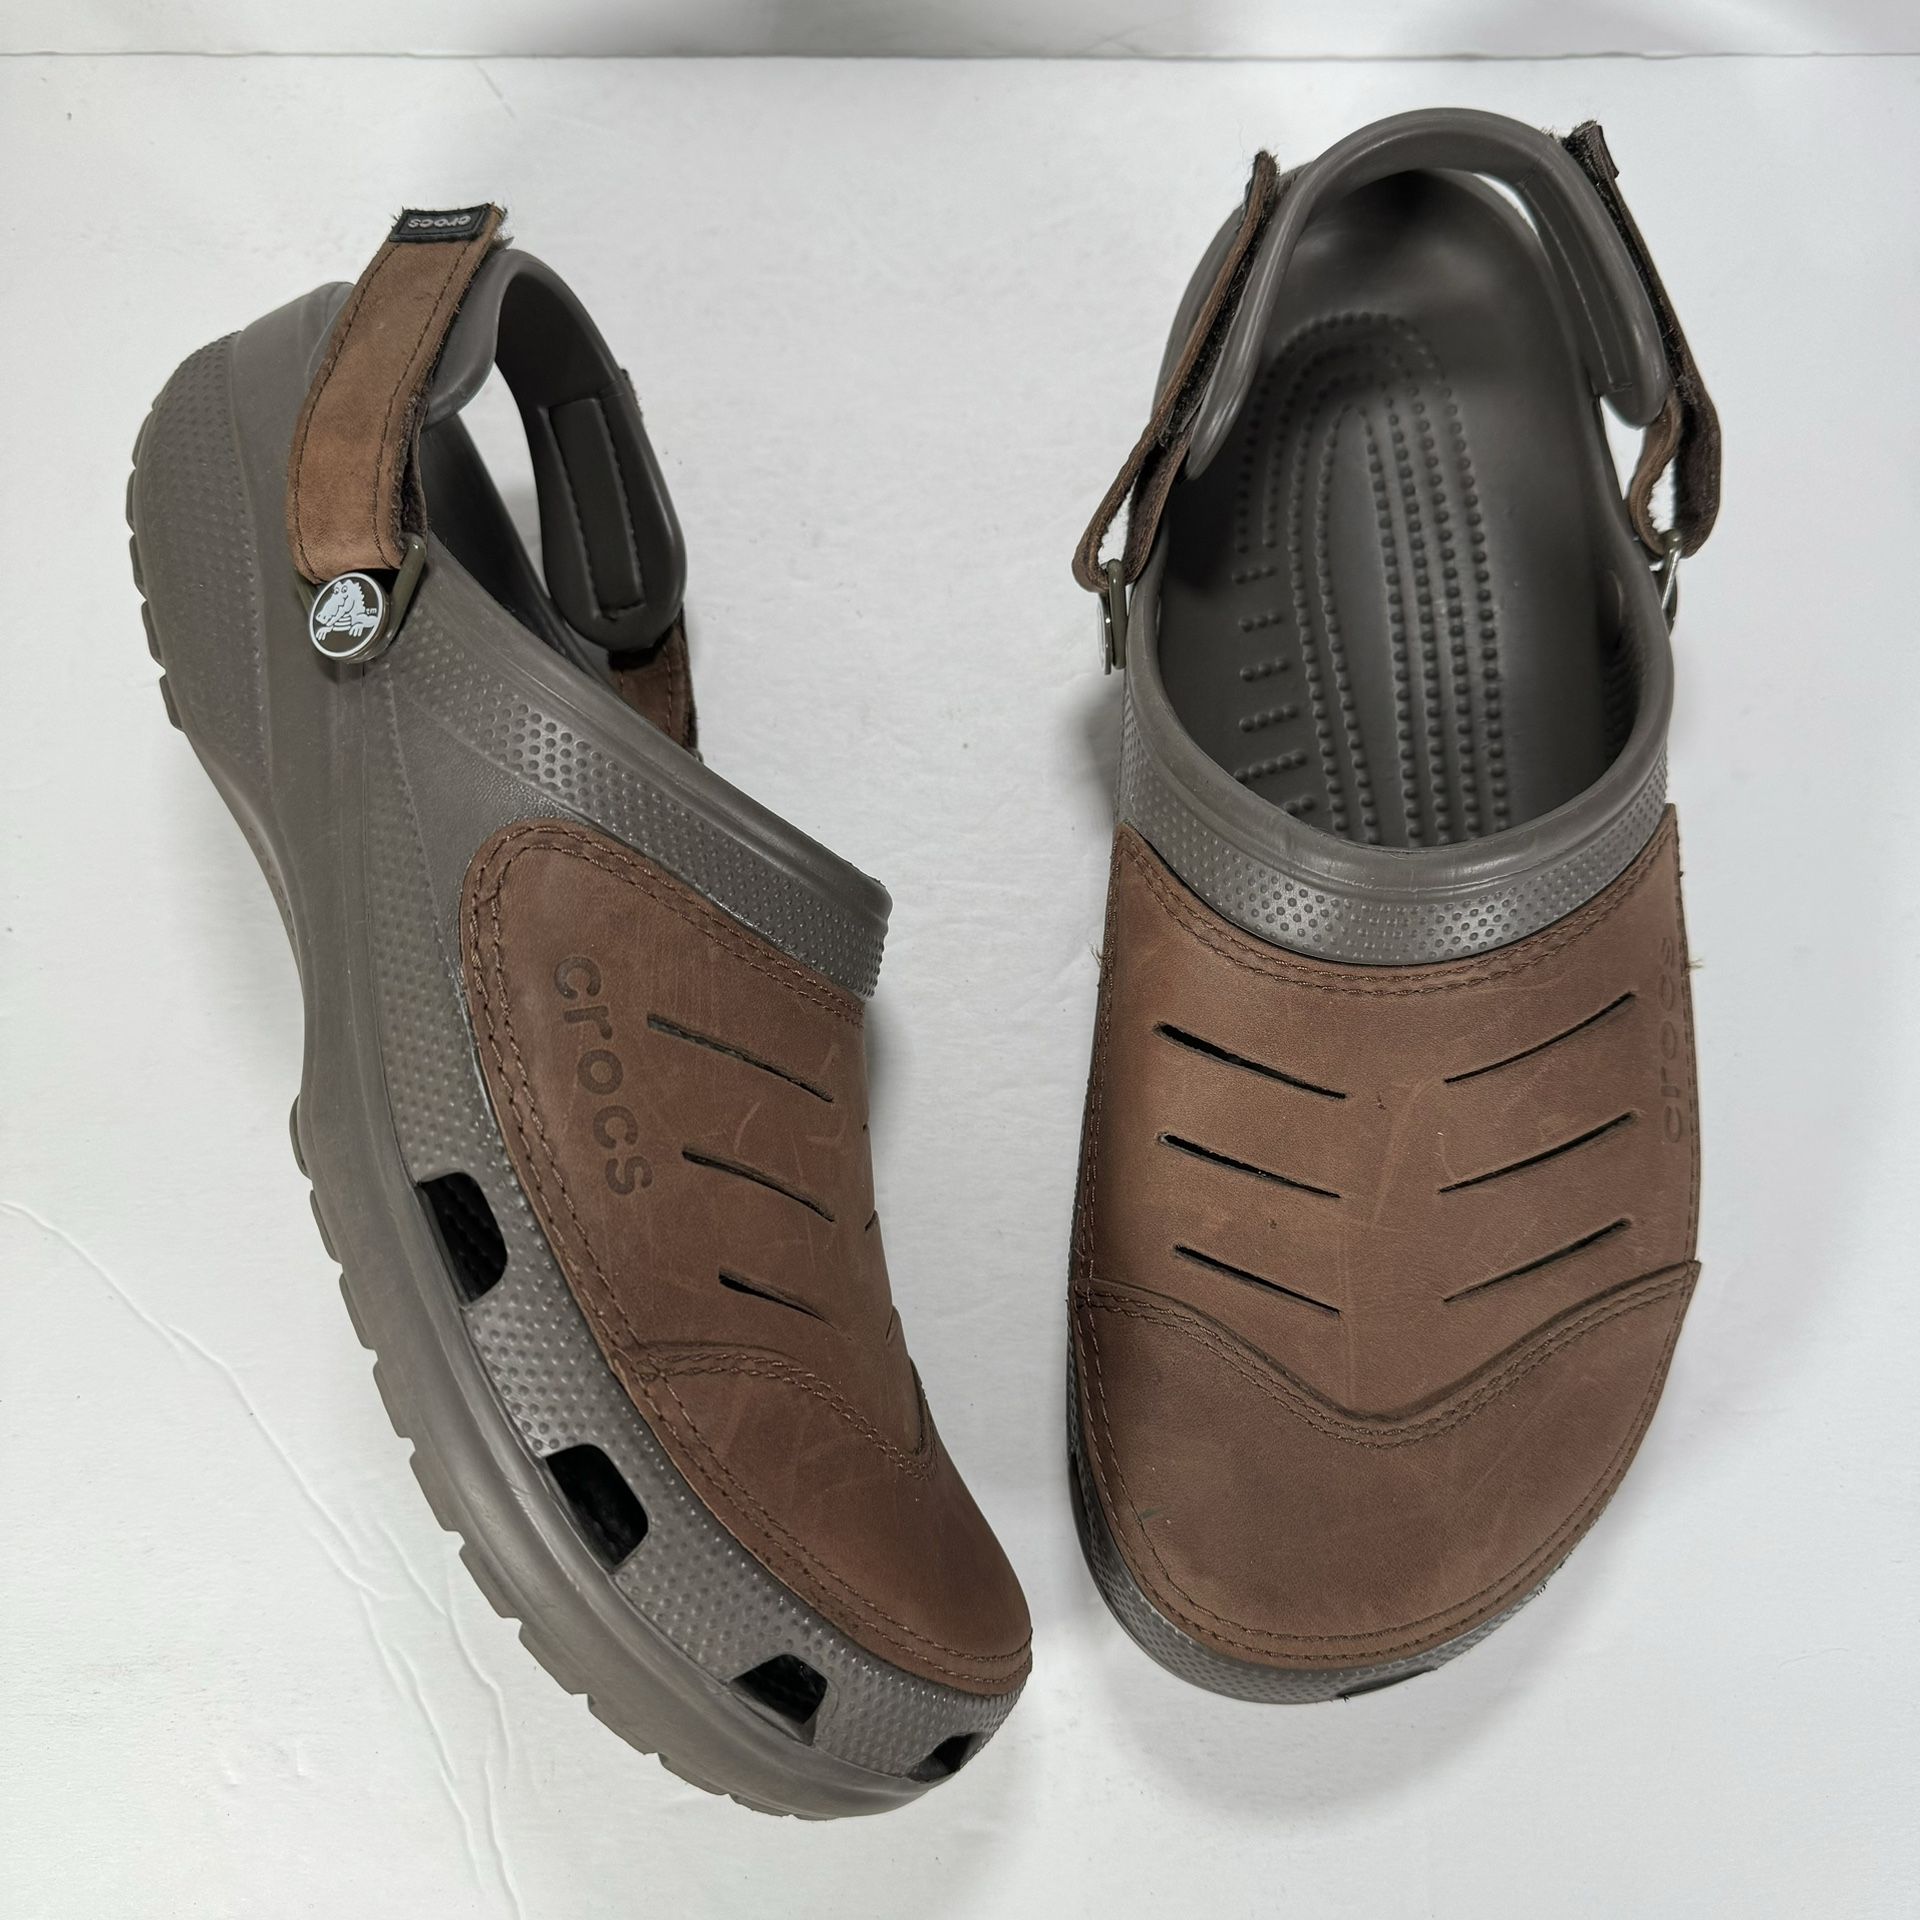 Crocs Rugged Leather Bogota Clogs Brown Sandals Men's Size 13